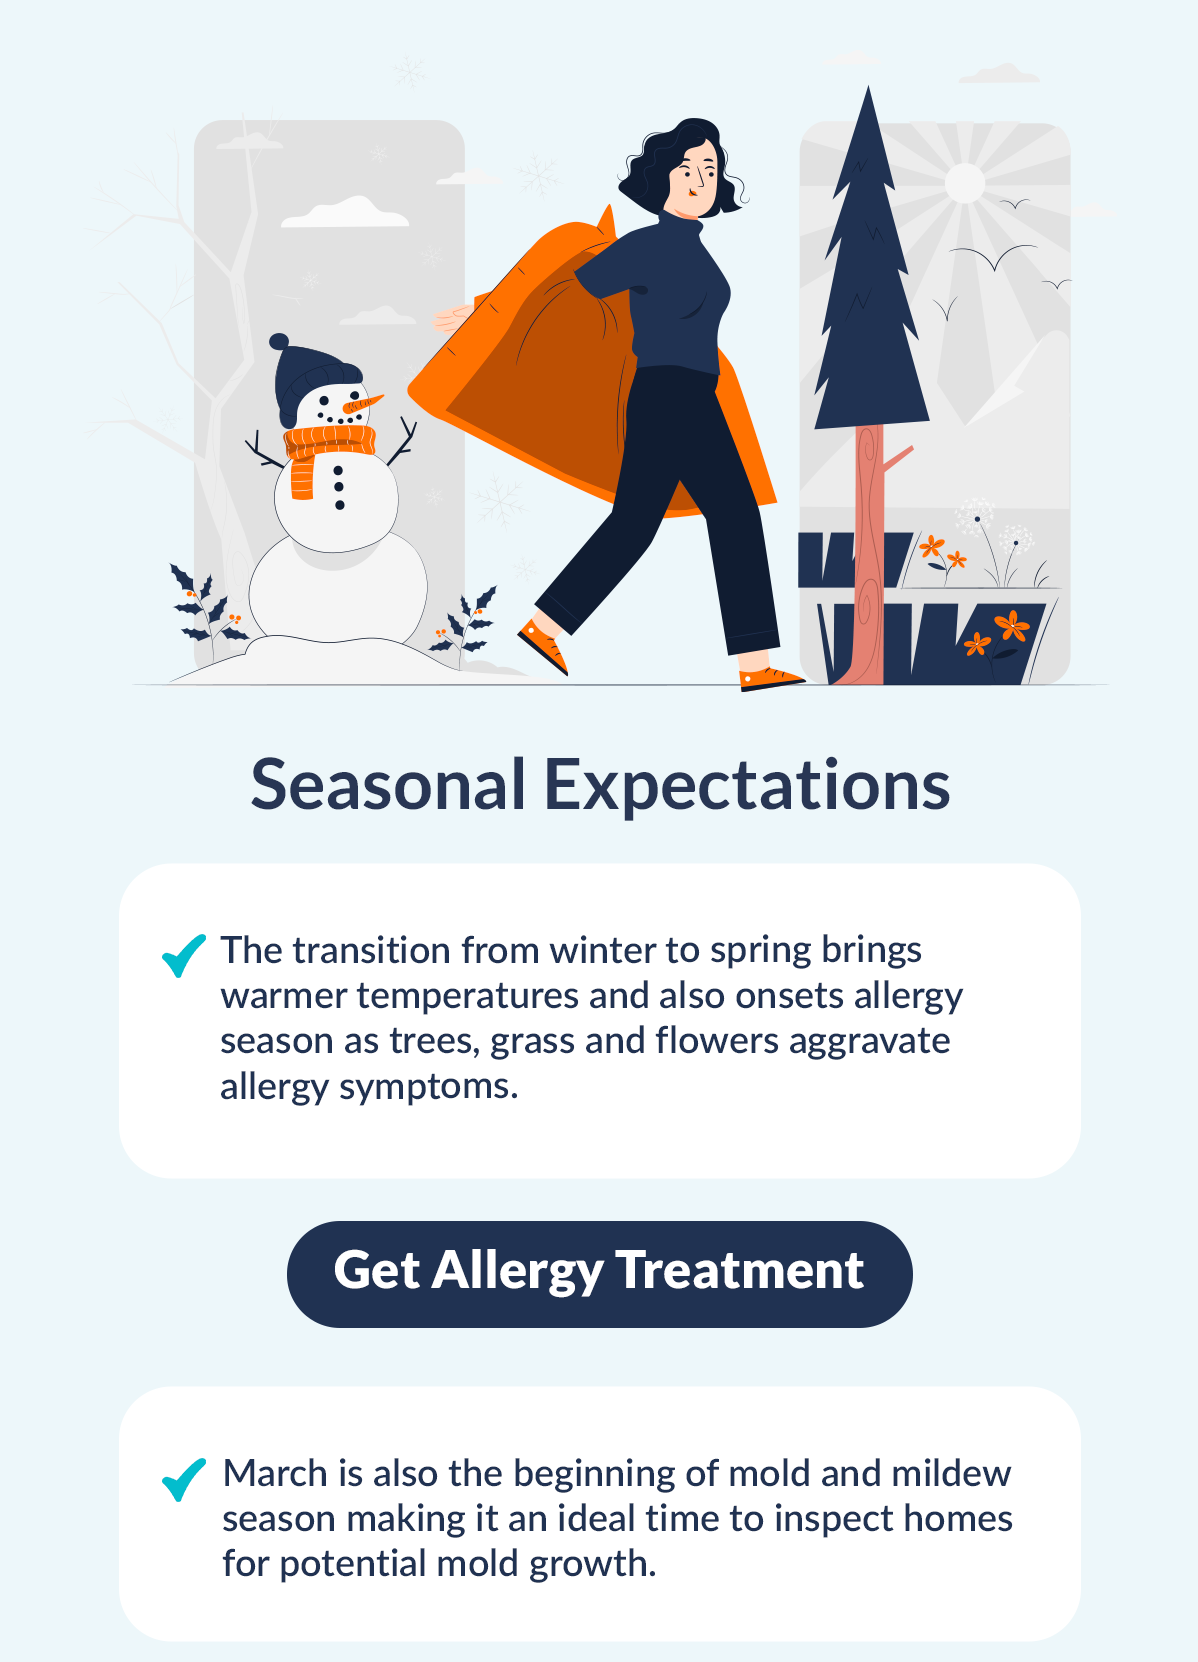 Get Allergy Treatment